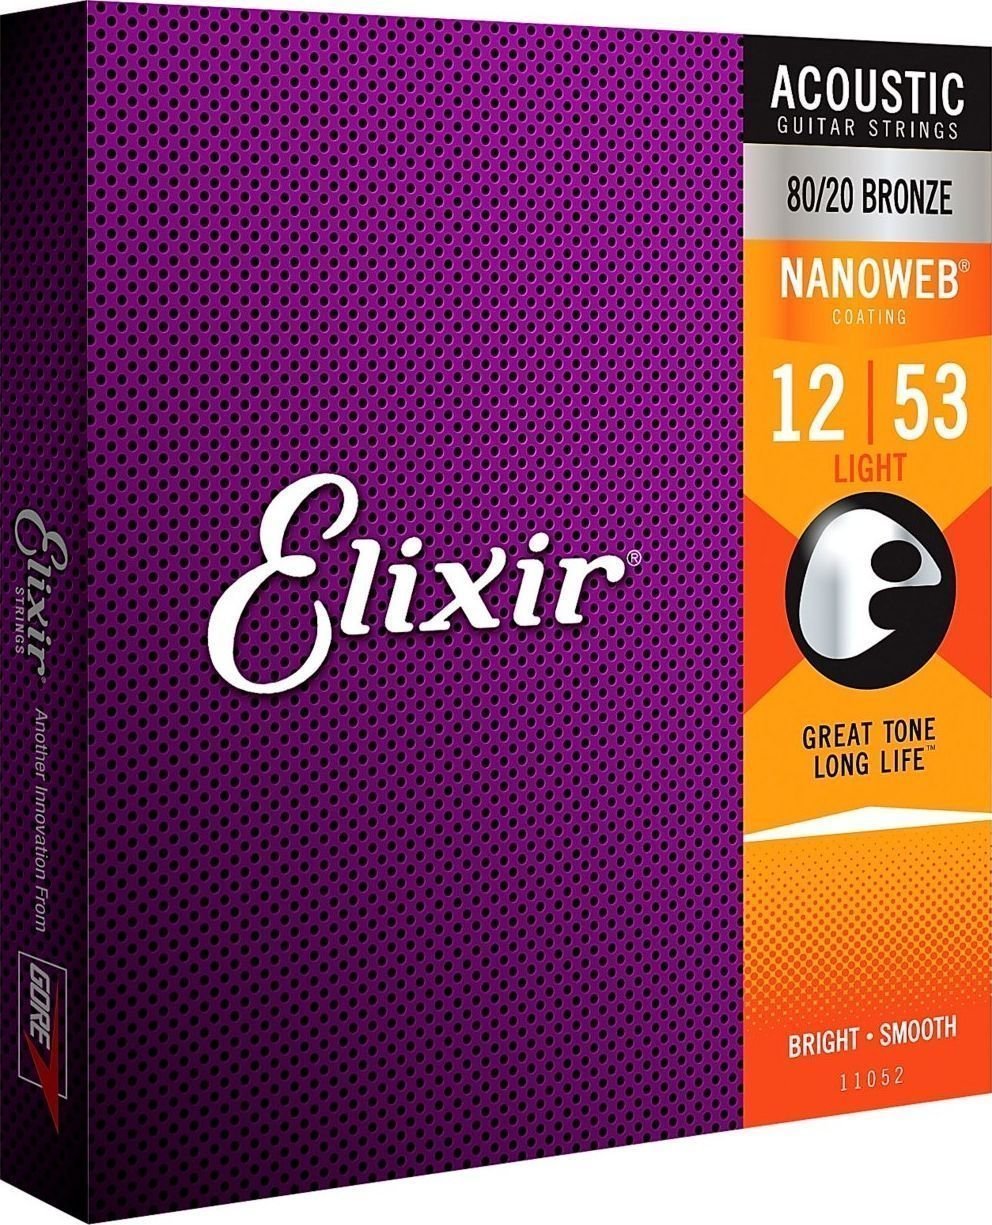 Guitarstrenge Elixir 11052 Nanoweb 12-53